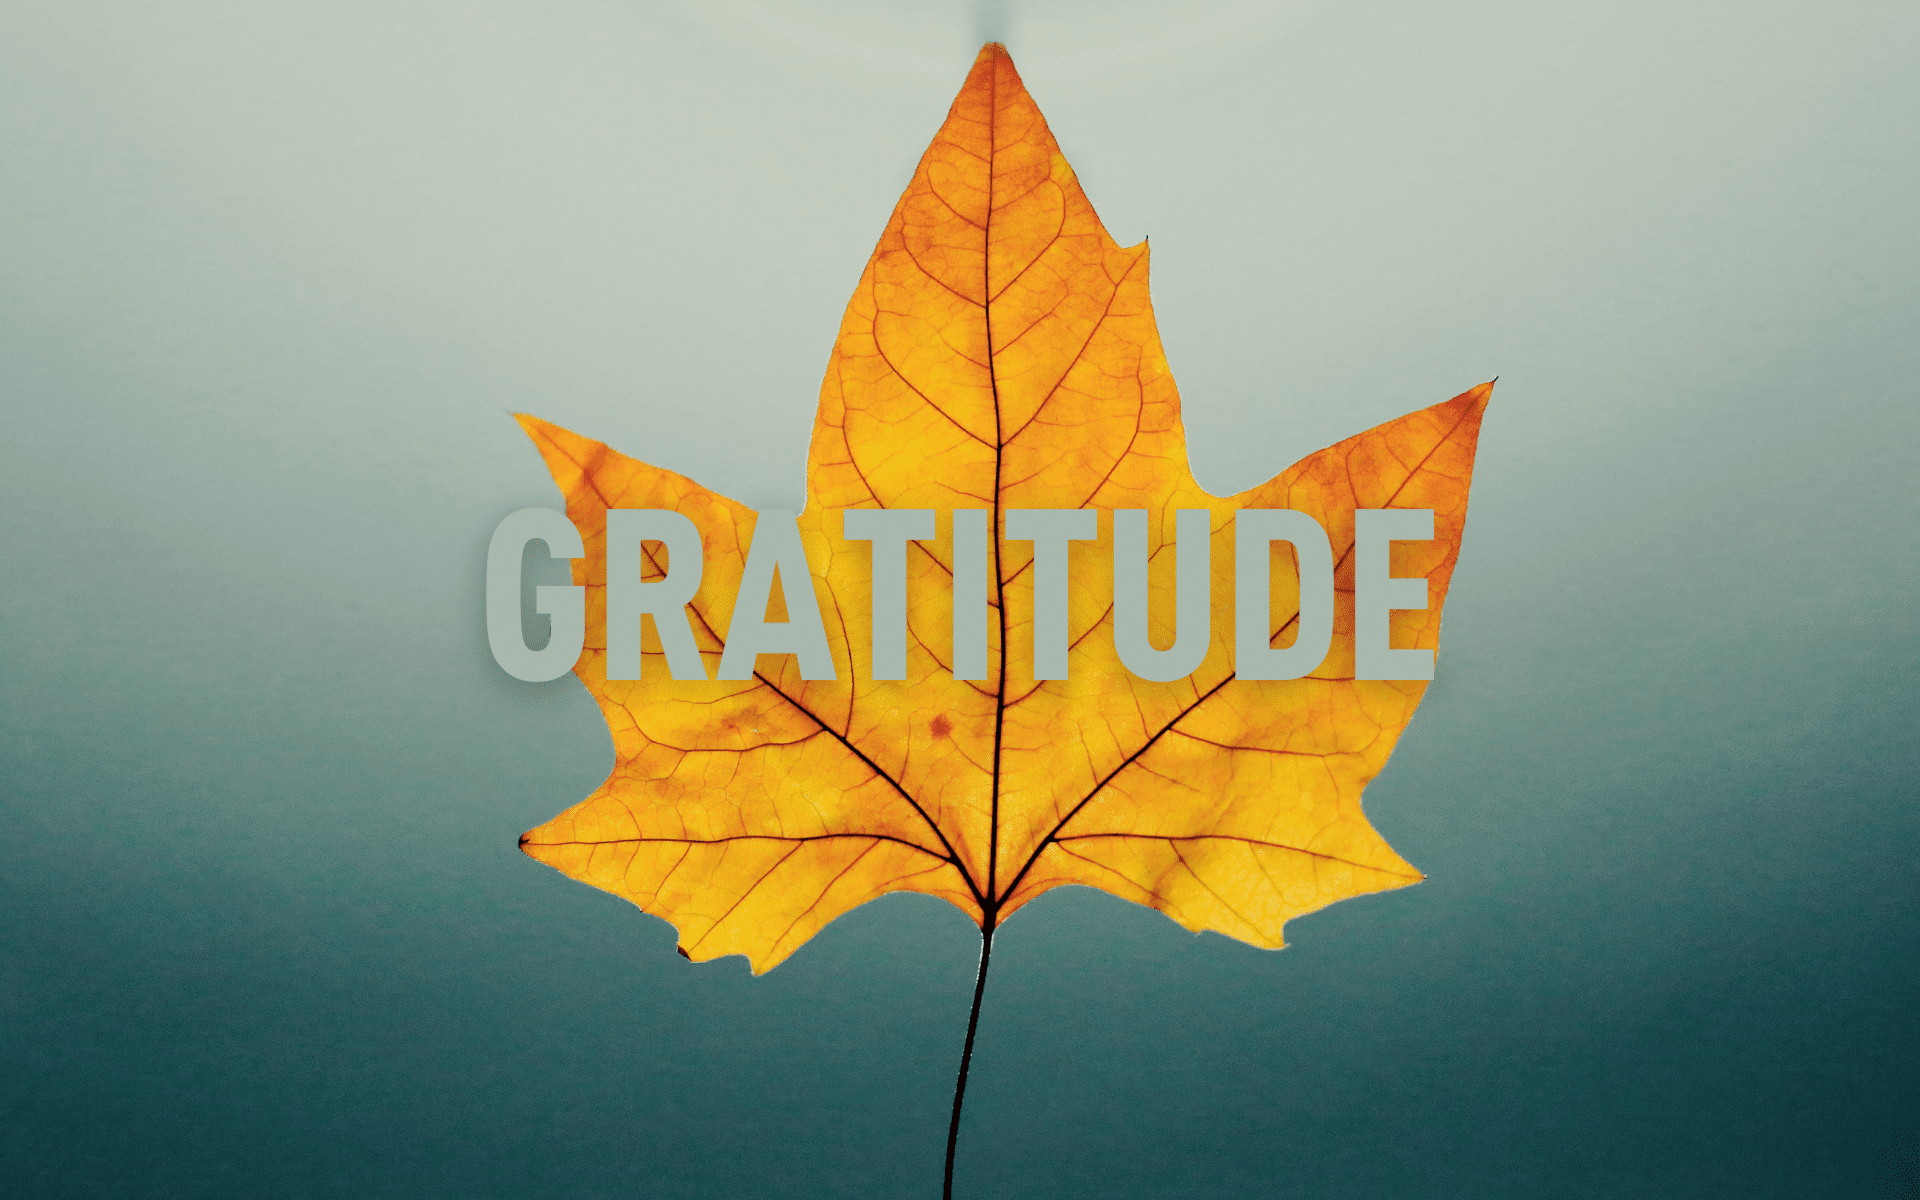 How to start a gratitude practice